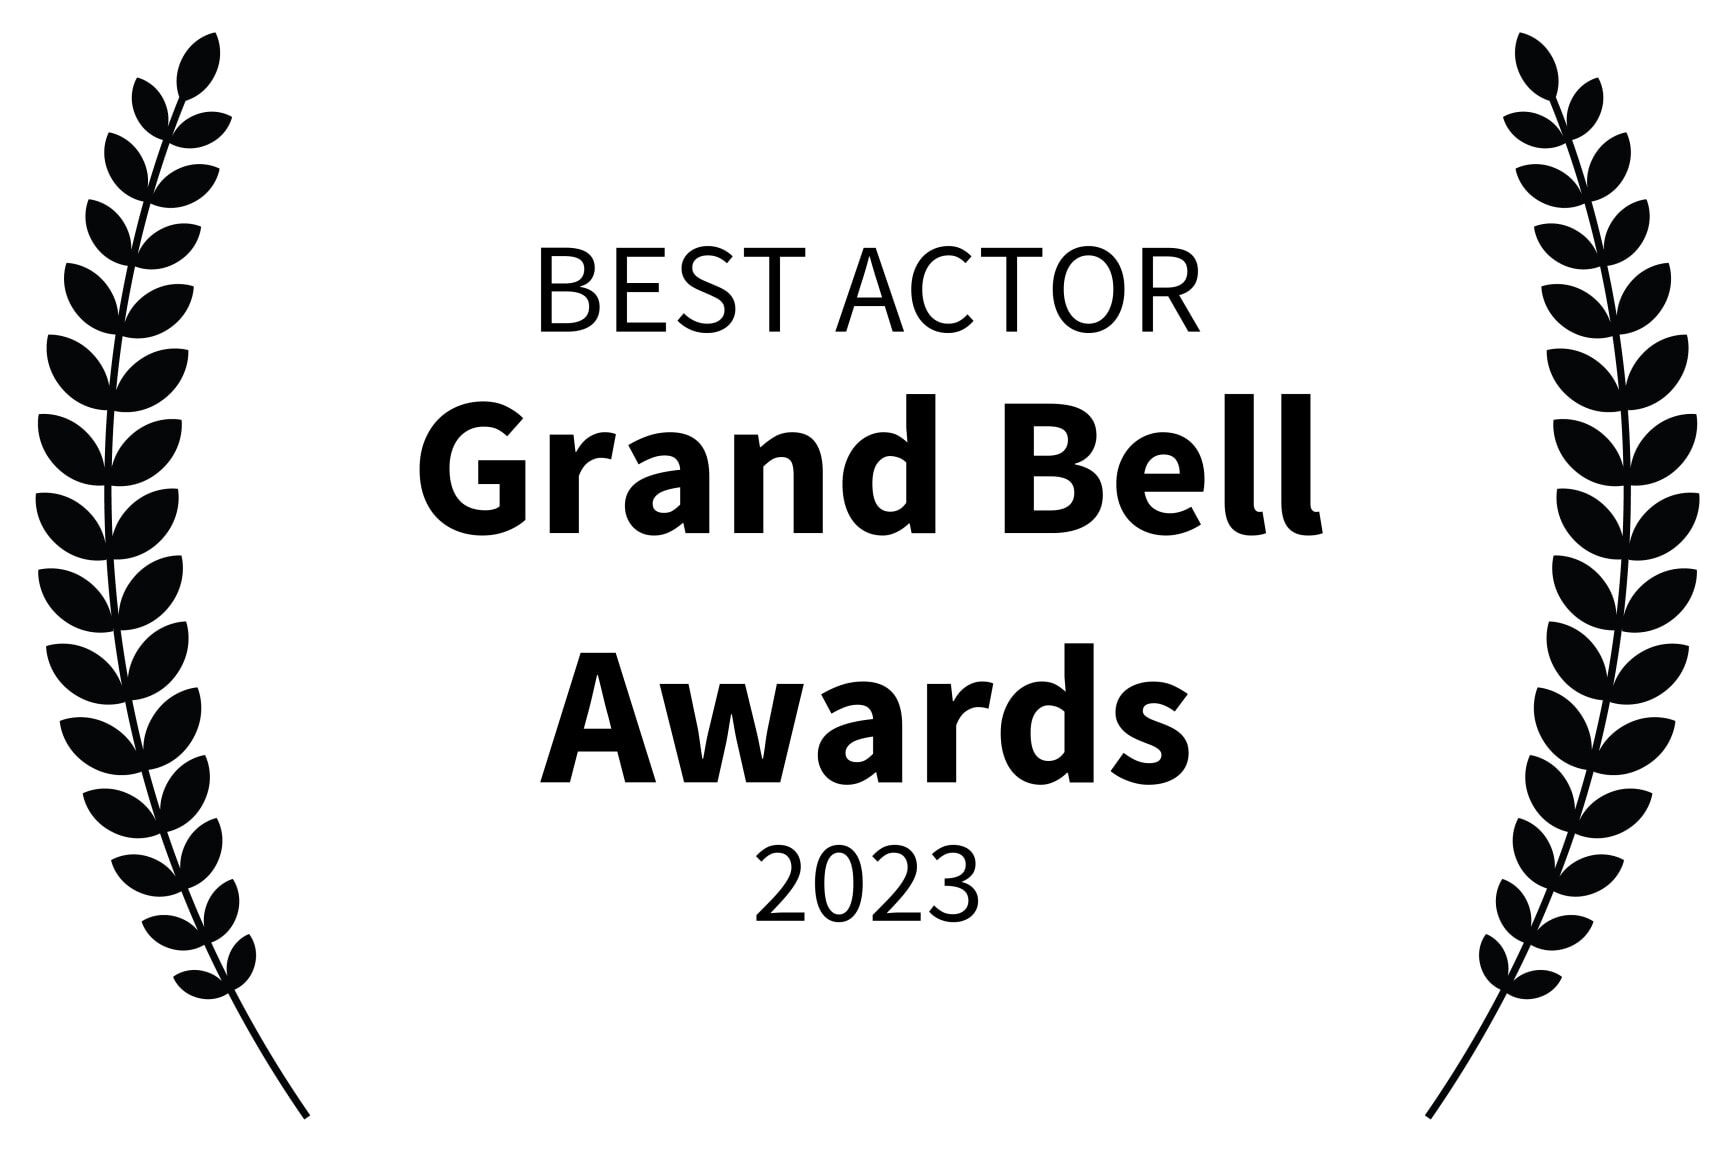 BEST ACTOR - Grand Bell Awards - 2023